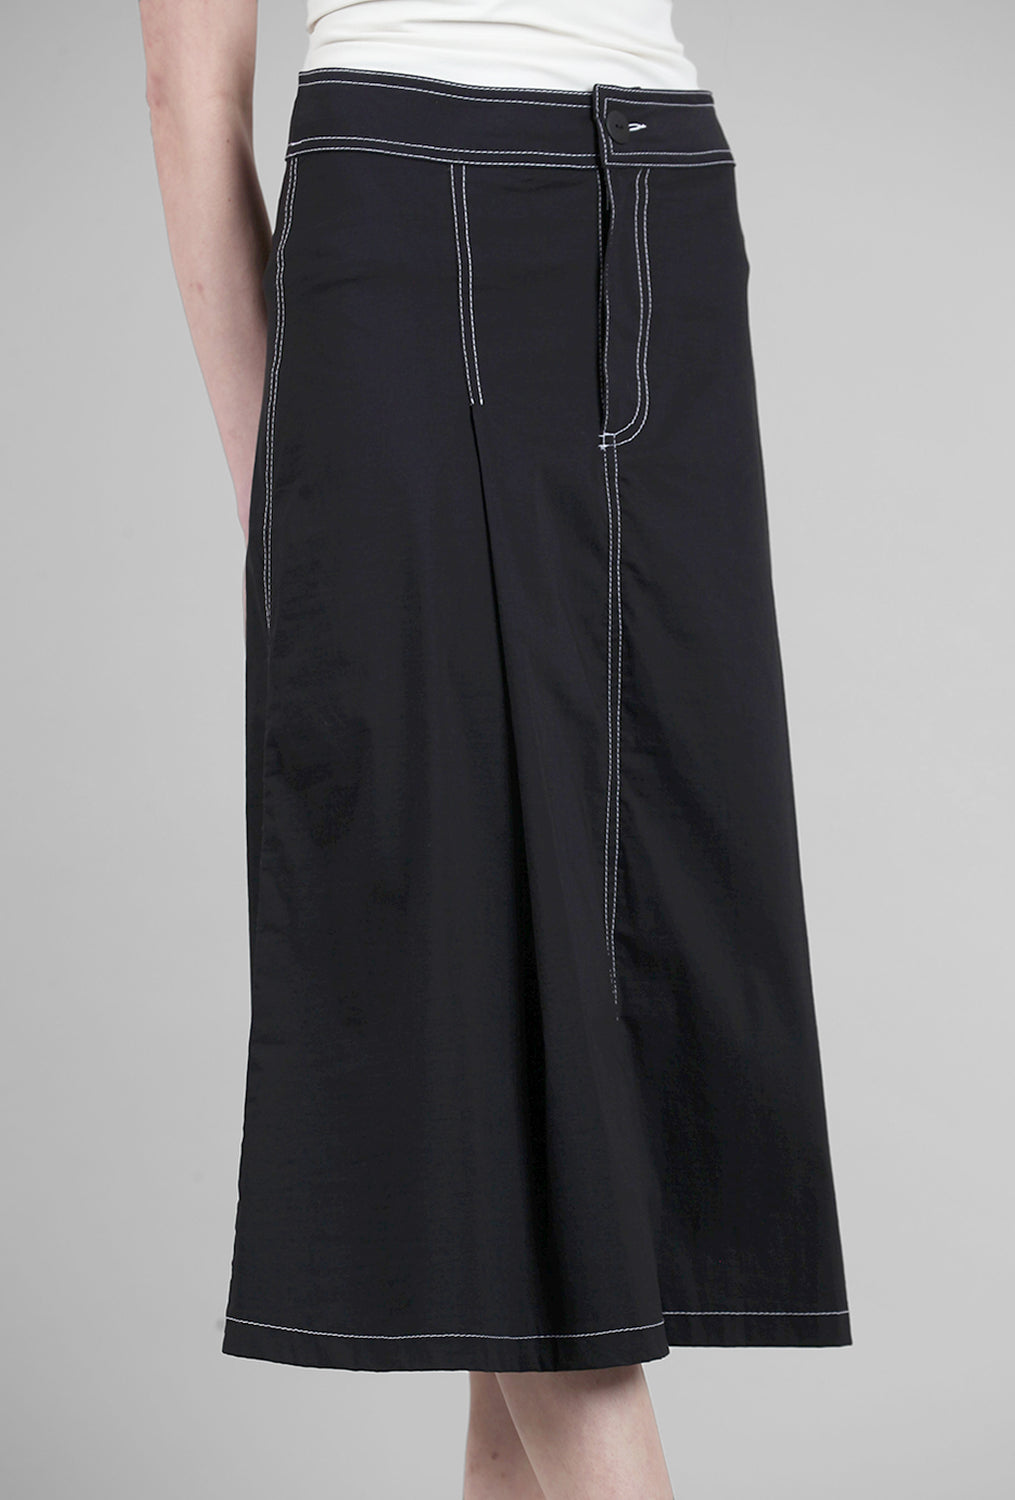 Perla Jeans-Stitch Skirt, Black